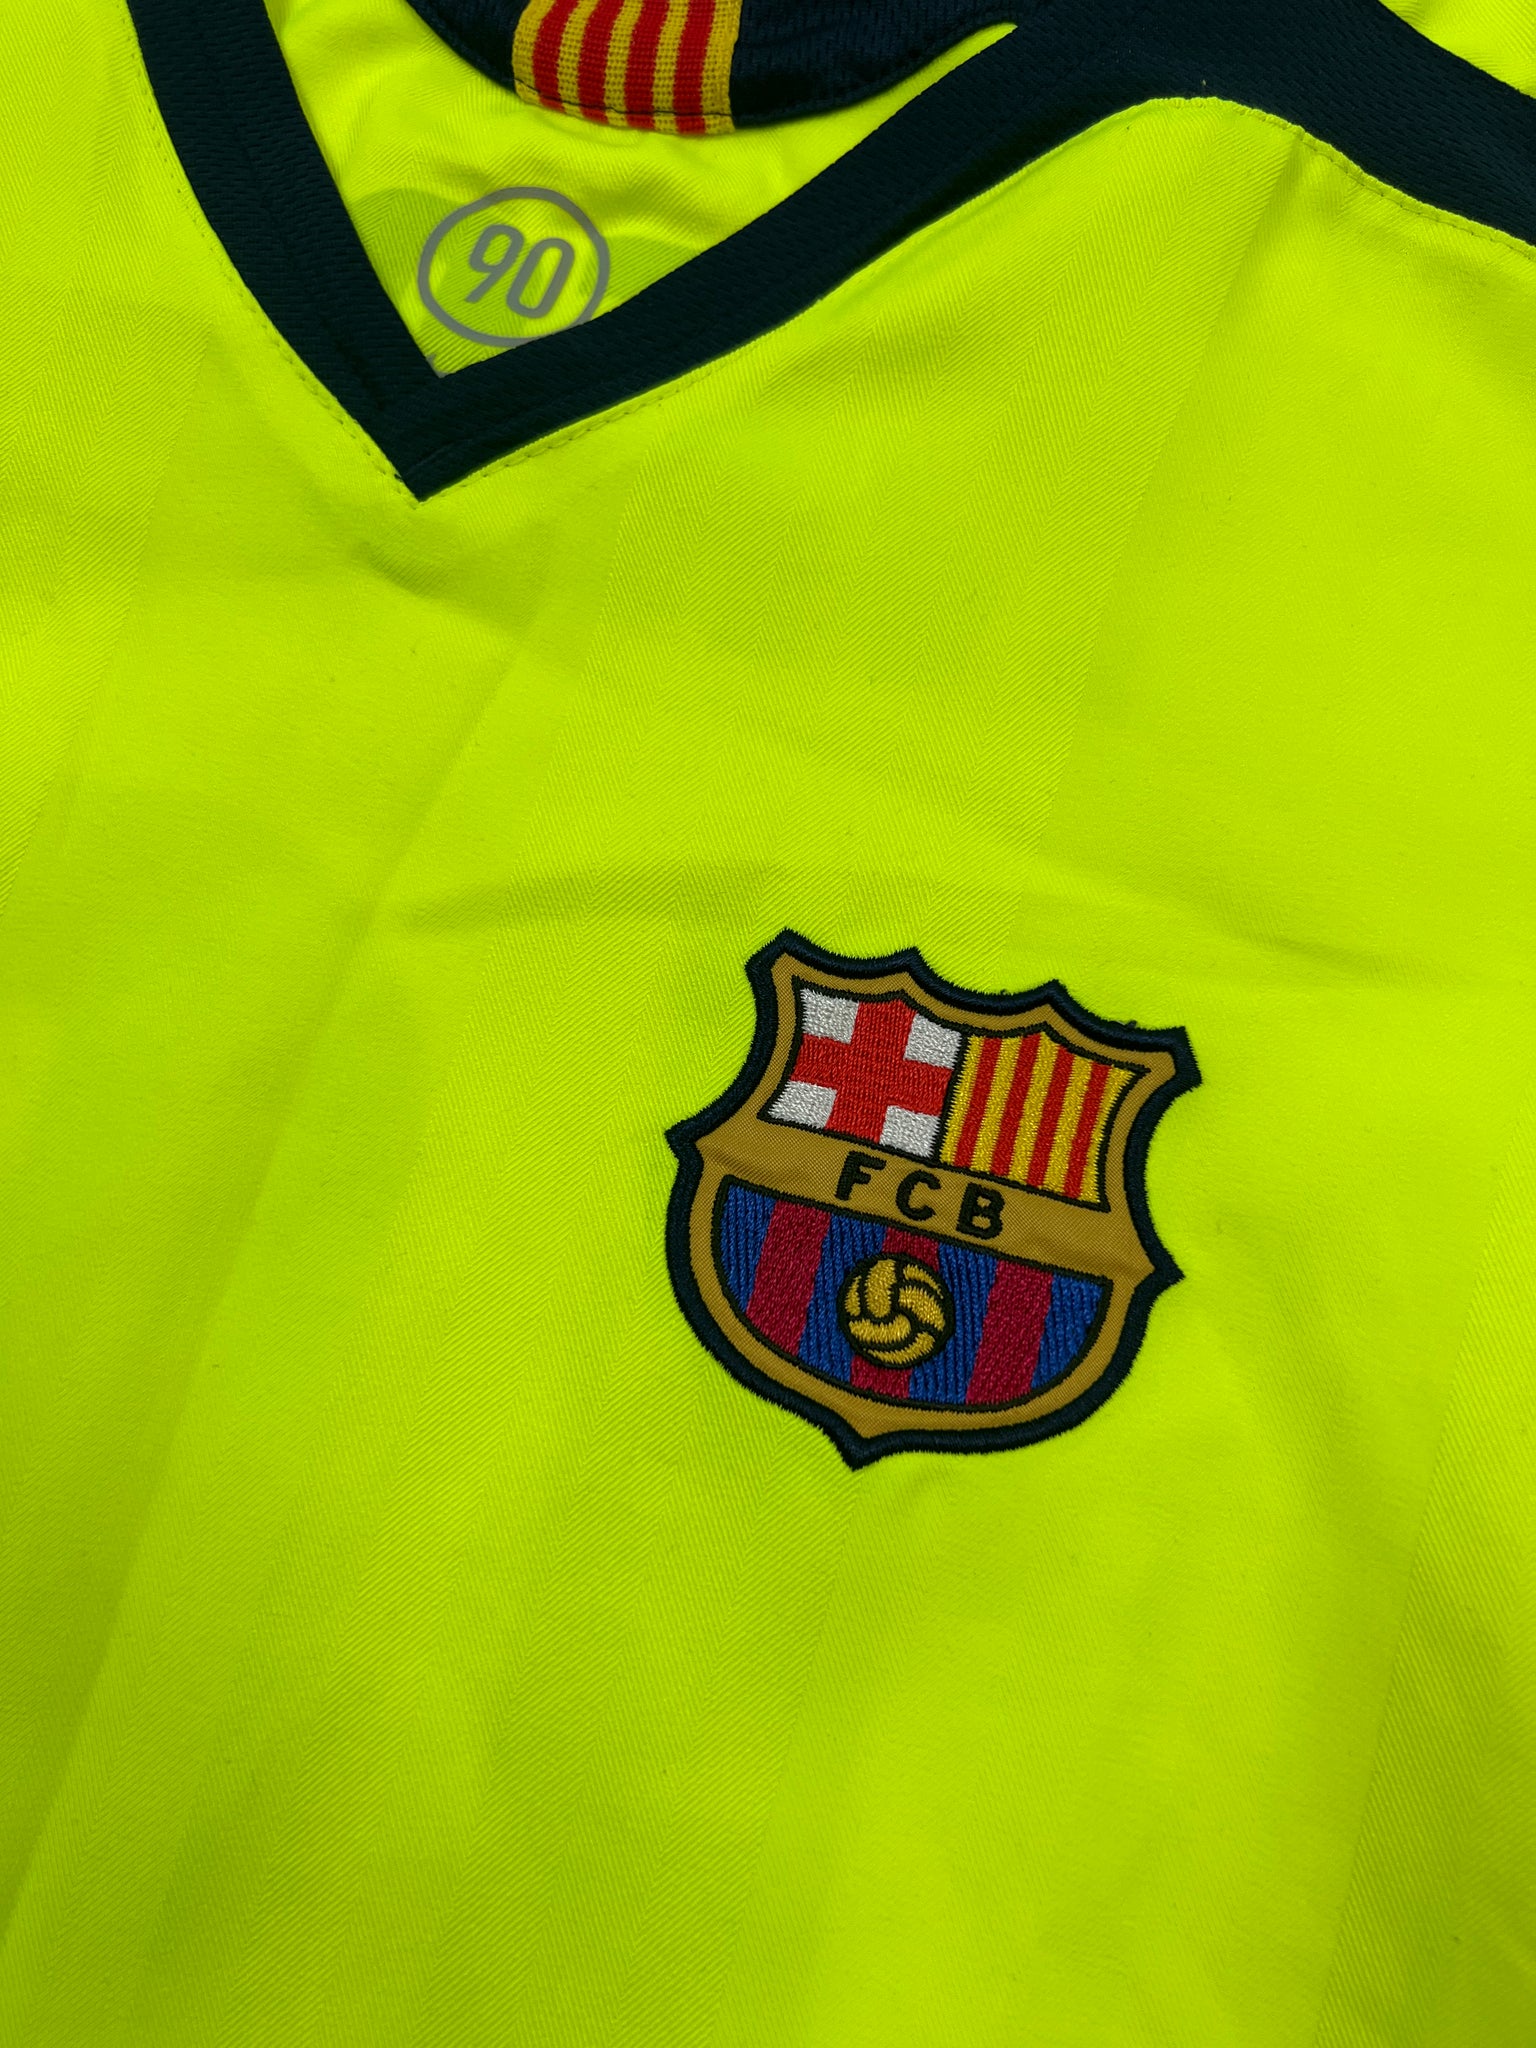 Nike FC Barcelona Jersey (Kids XL)